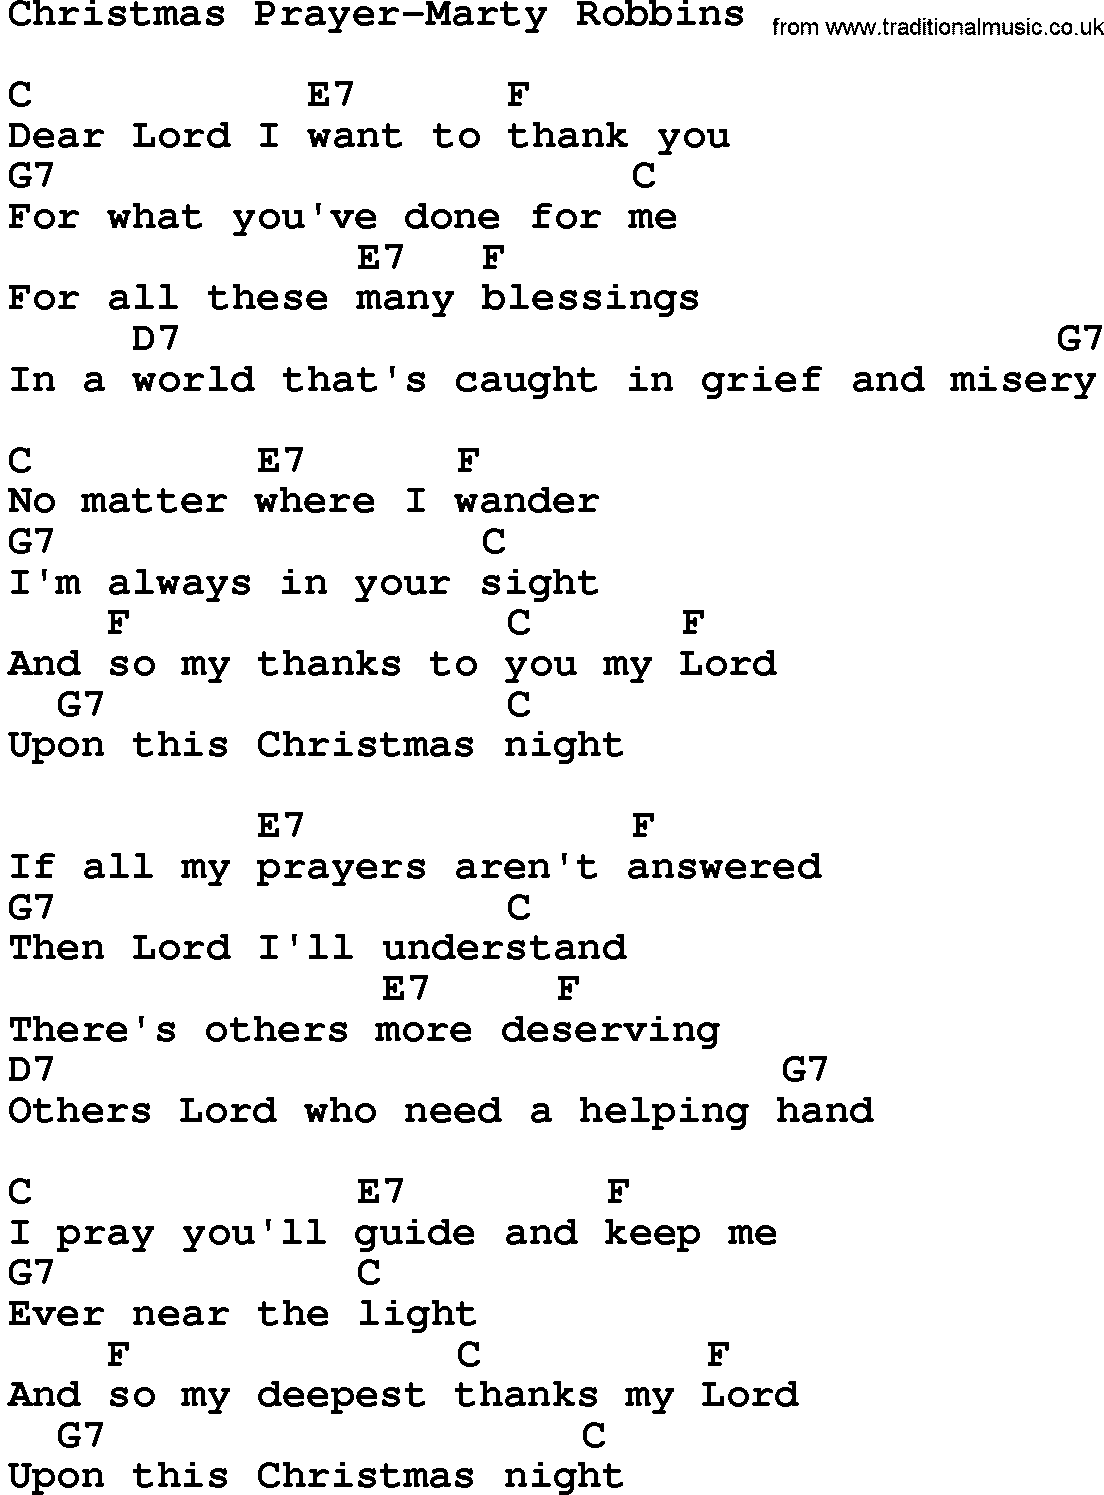 Country music song: Christmas Prayer-Marty Robbins lyrics and chords